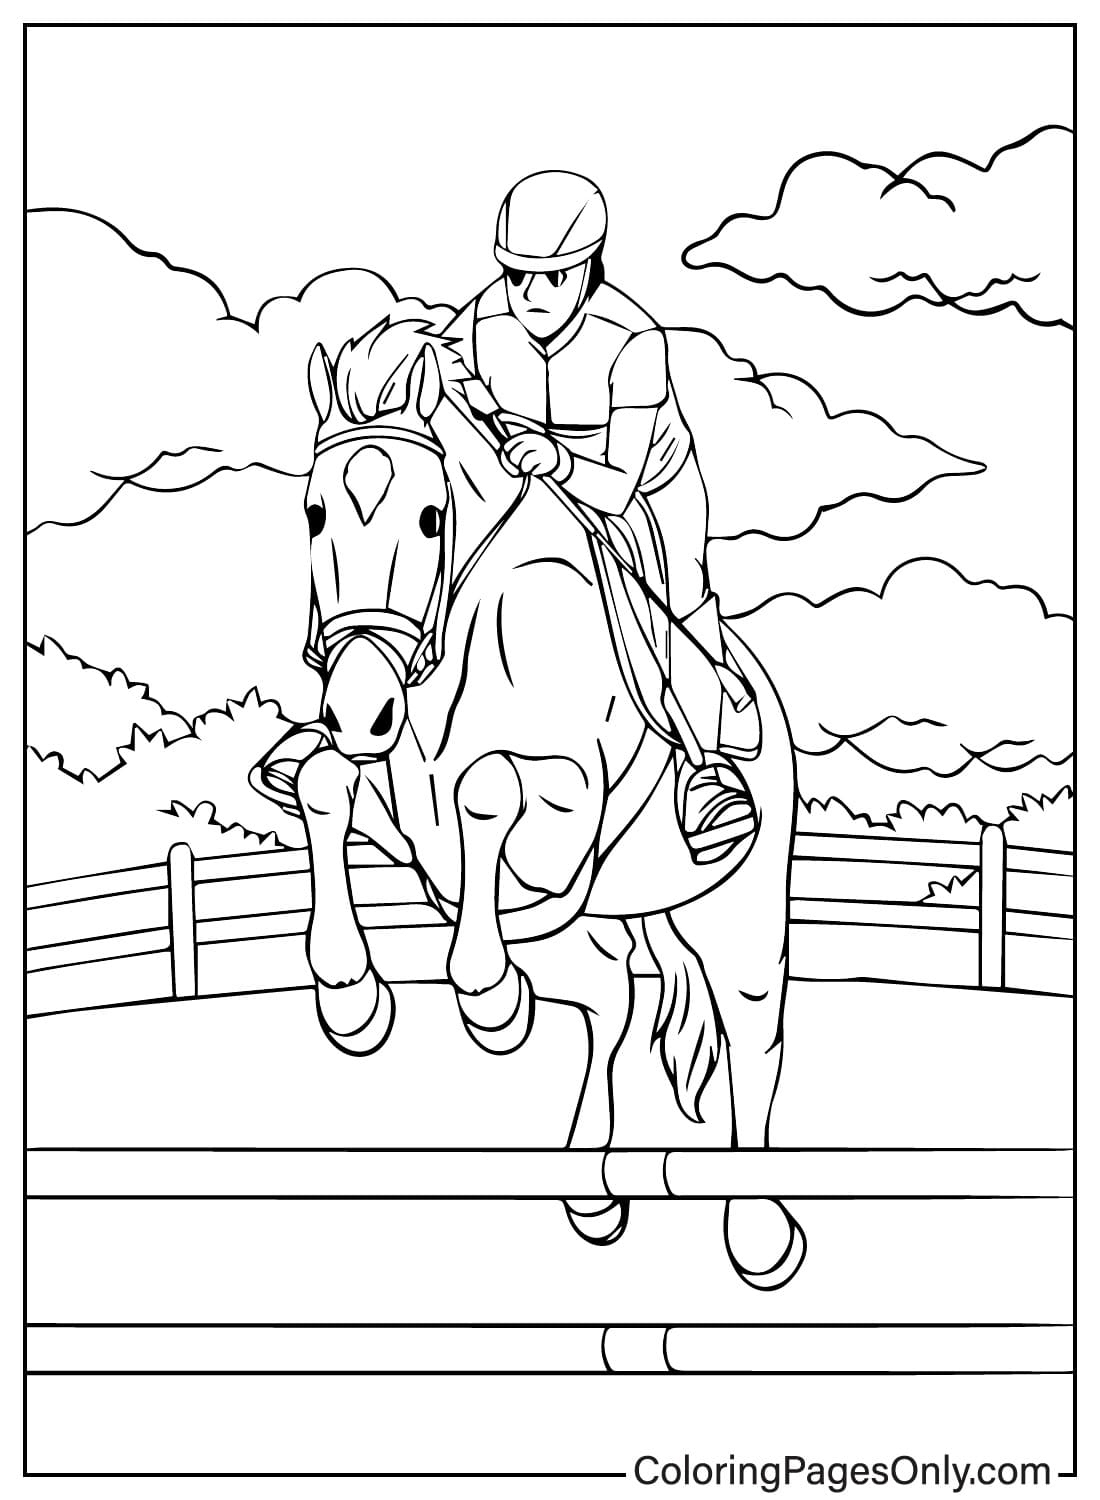 رجل يركب حصانًا من كنتاكي ديربي